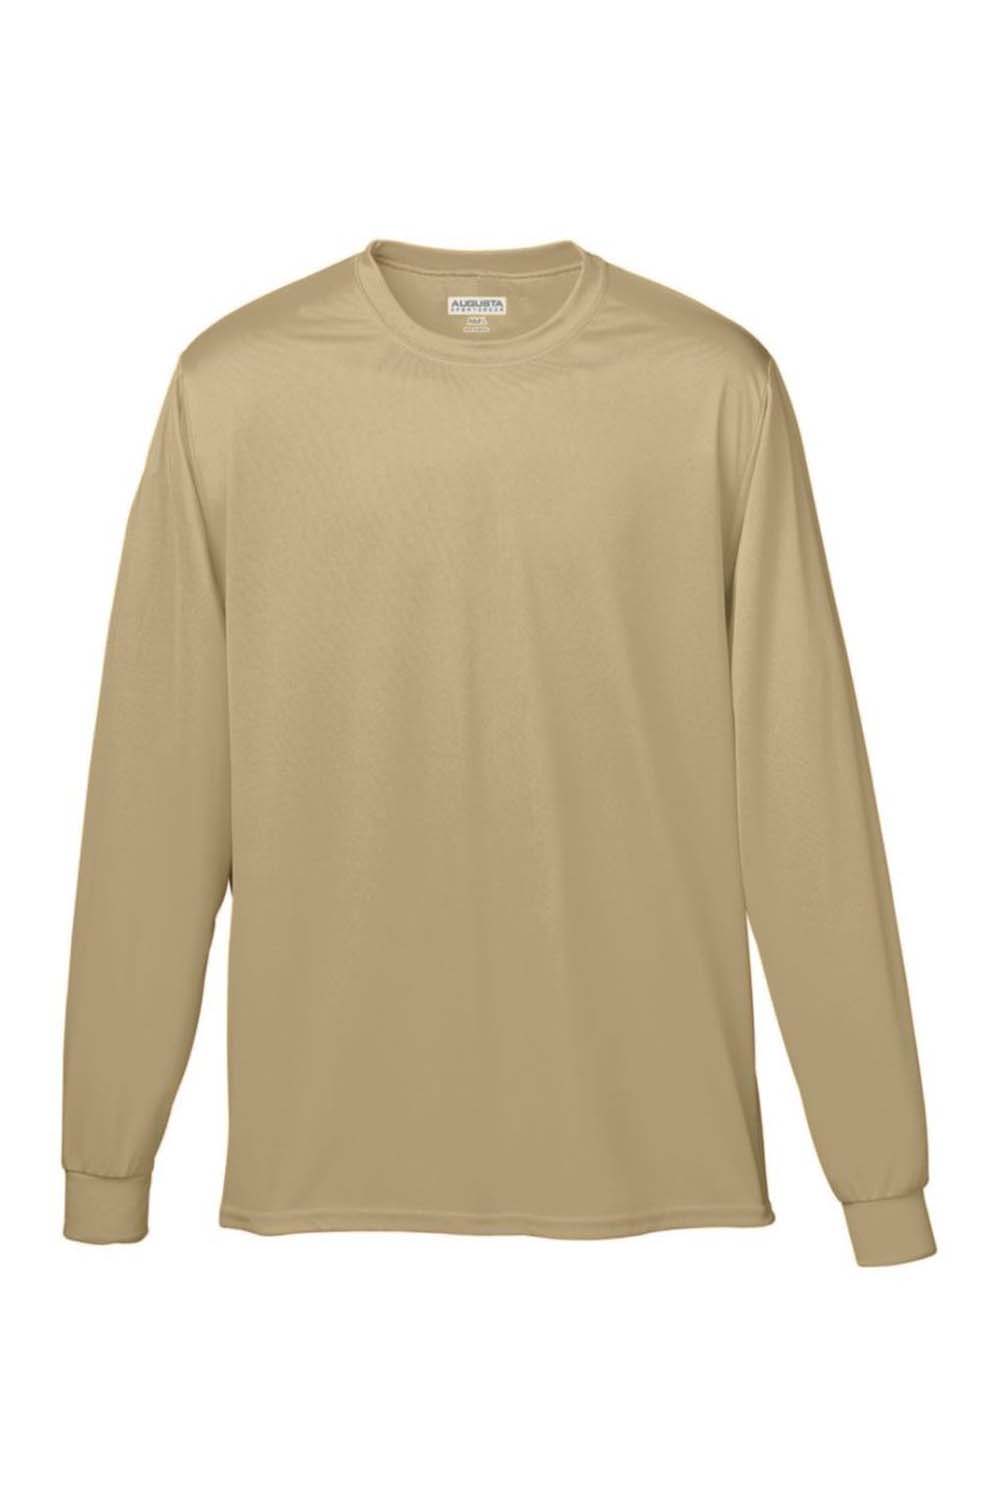 Augusta Sportswear 788 Mens Moisture Wicking Long Sleeve Crewneck T-Shirt Vegas Gold Model Flat Front